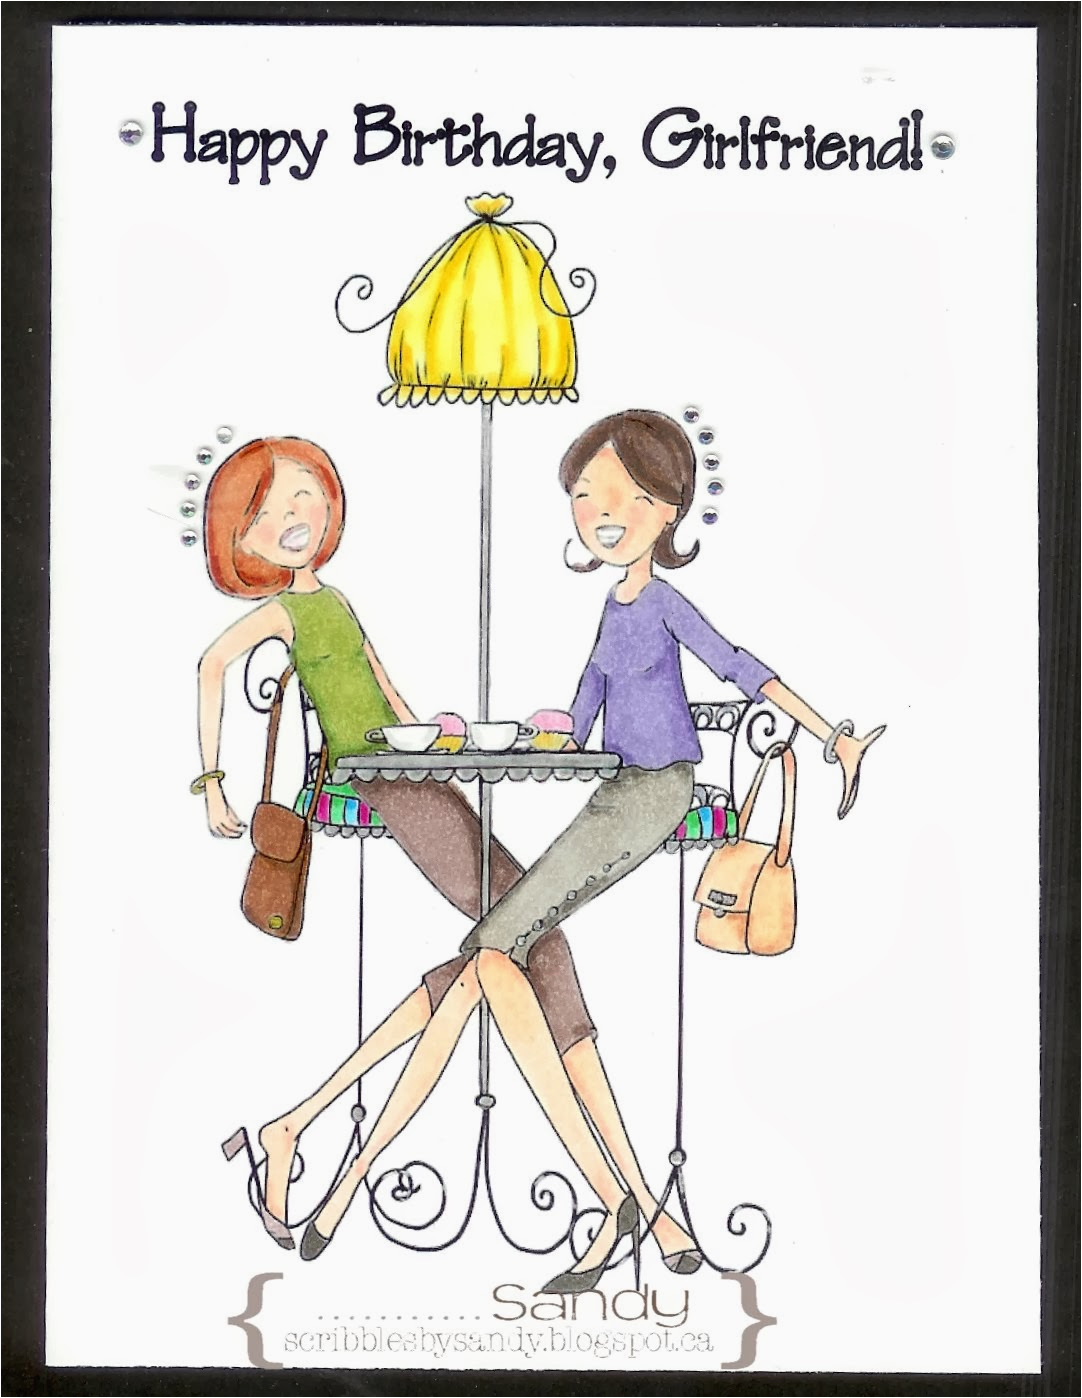 Happy Birthday Girlfriend Scribbles by Sandy August 2013